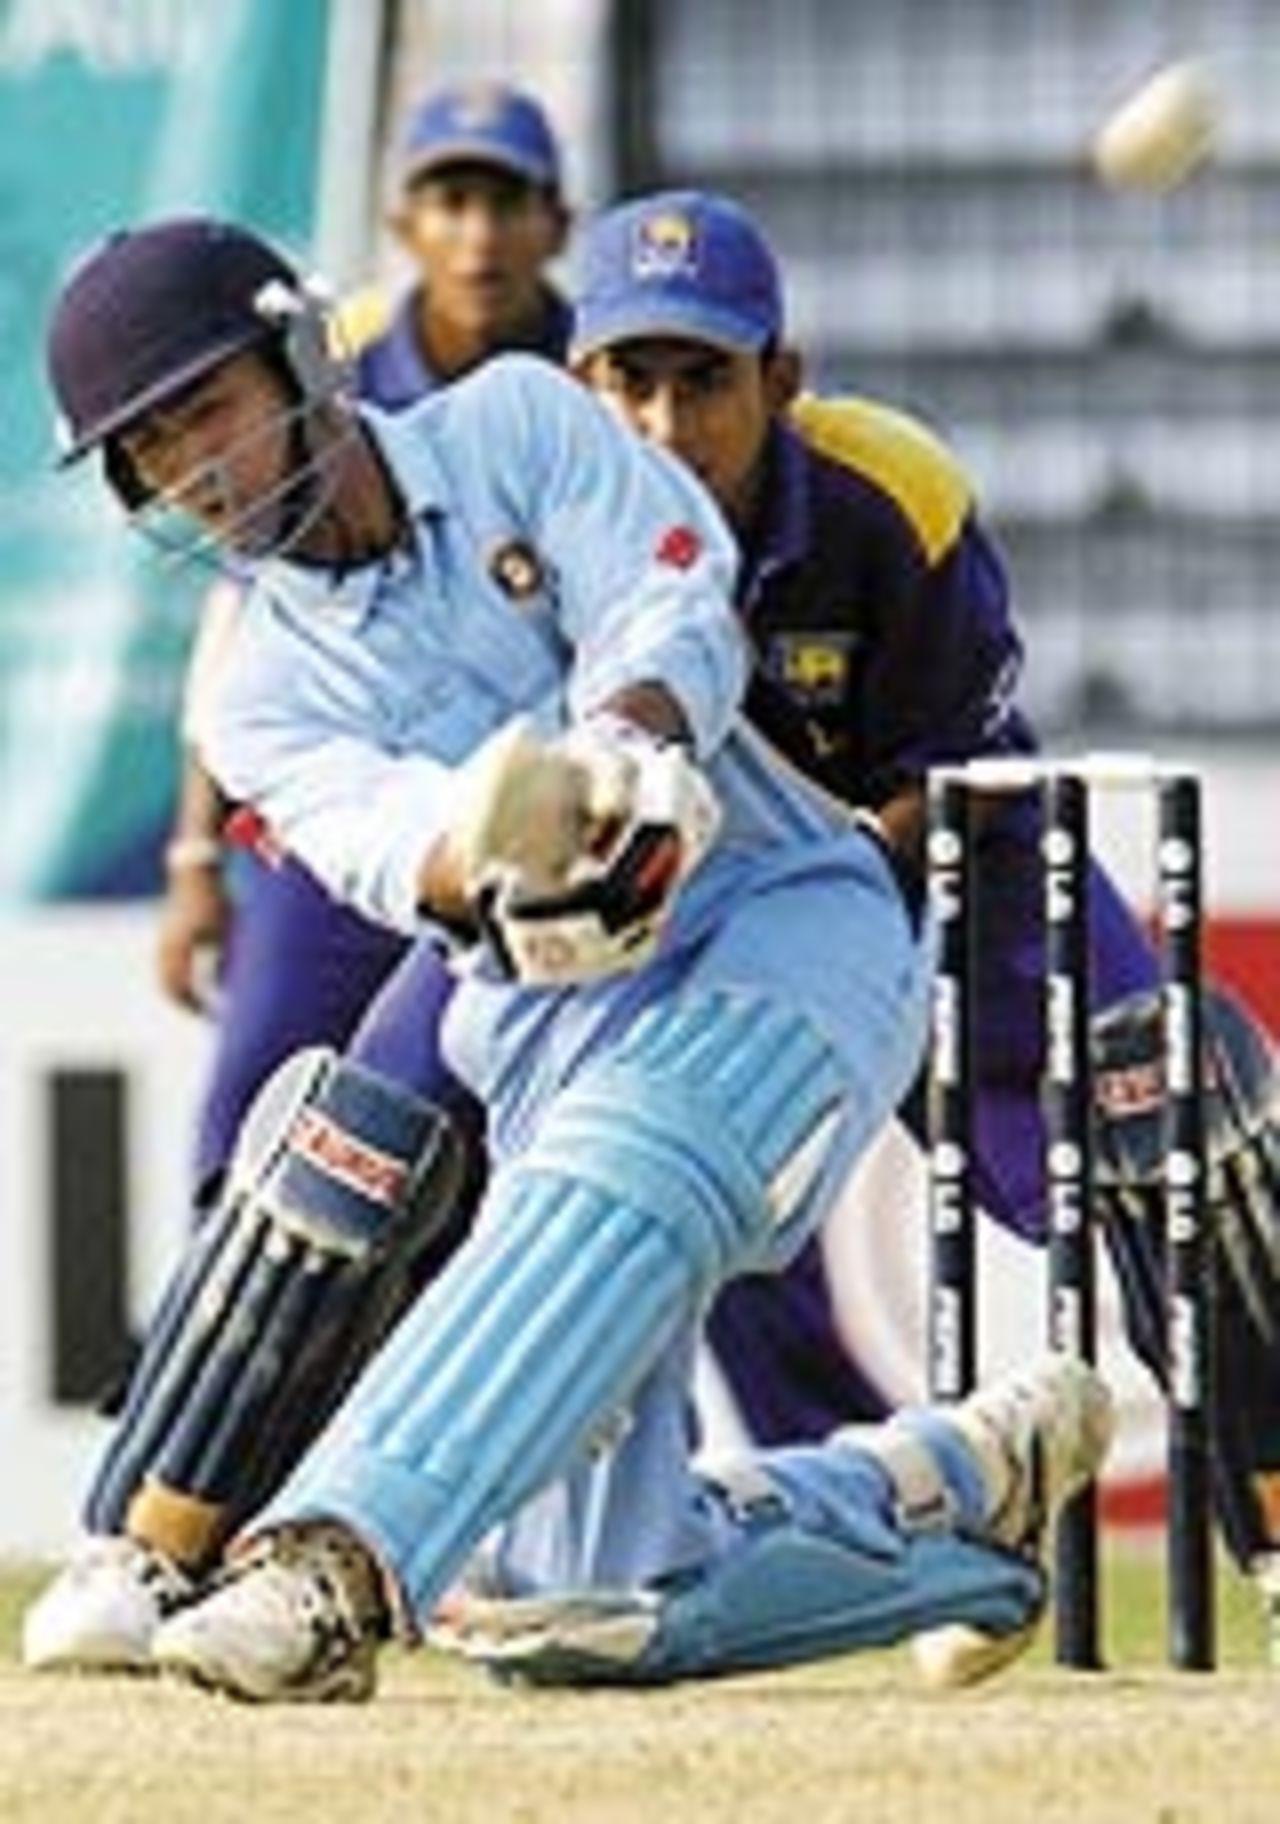 Dinesh Karthik sweeps, India v Sri Lanka, Under-19 World Cup, Bangladesh, February 26, 2004